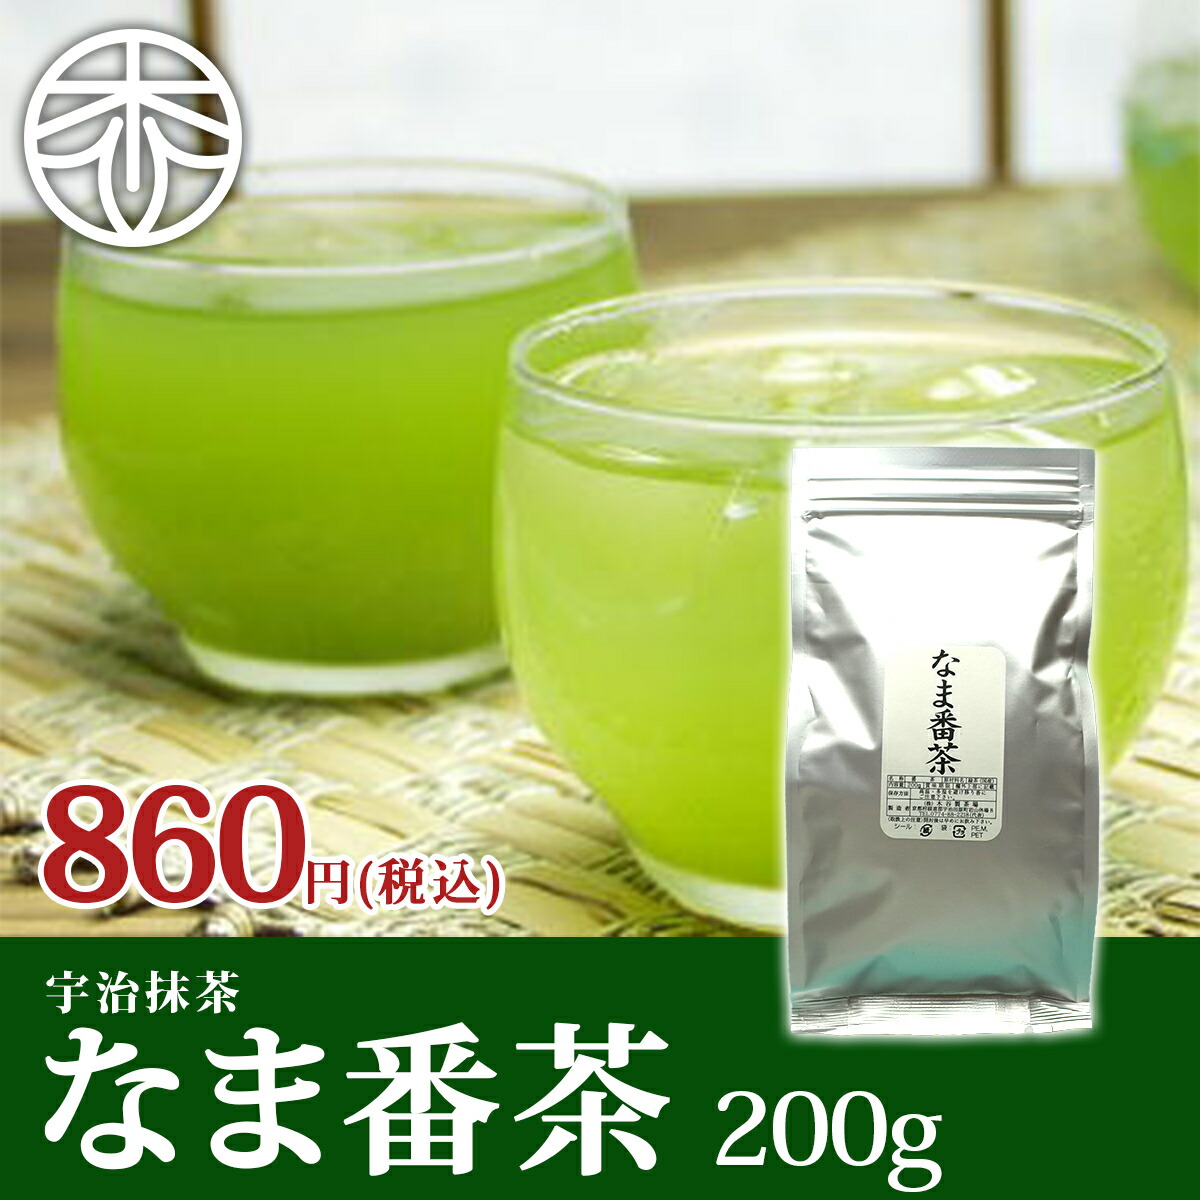 【2023 新茶】煎茶 なま番茶 200g お茶 緑茶 茶葉 日本茶 煎茶 宇治茶 京都